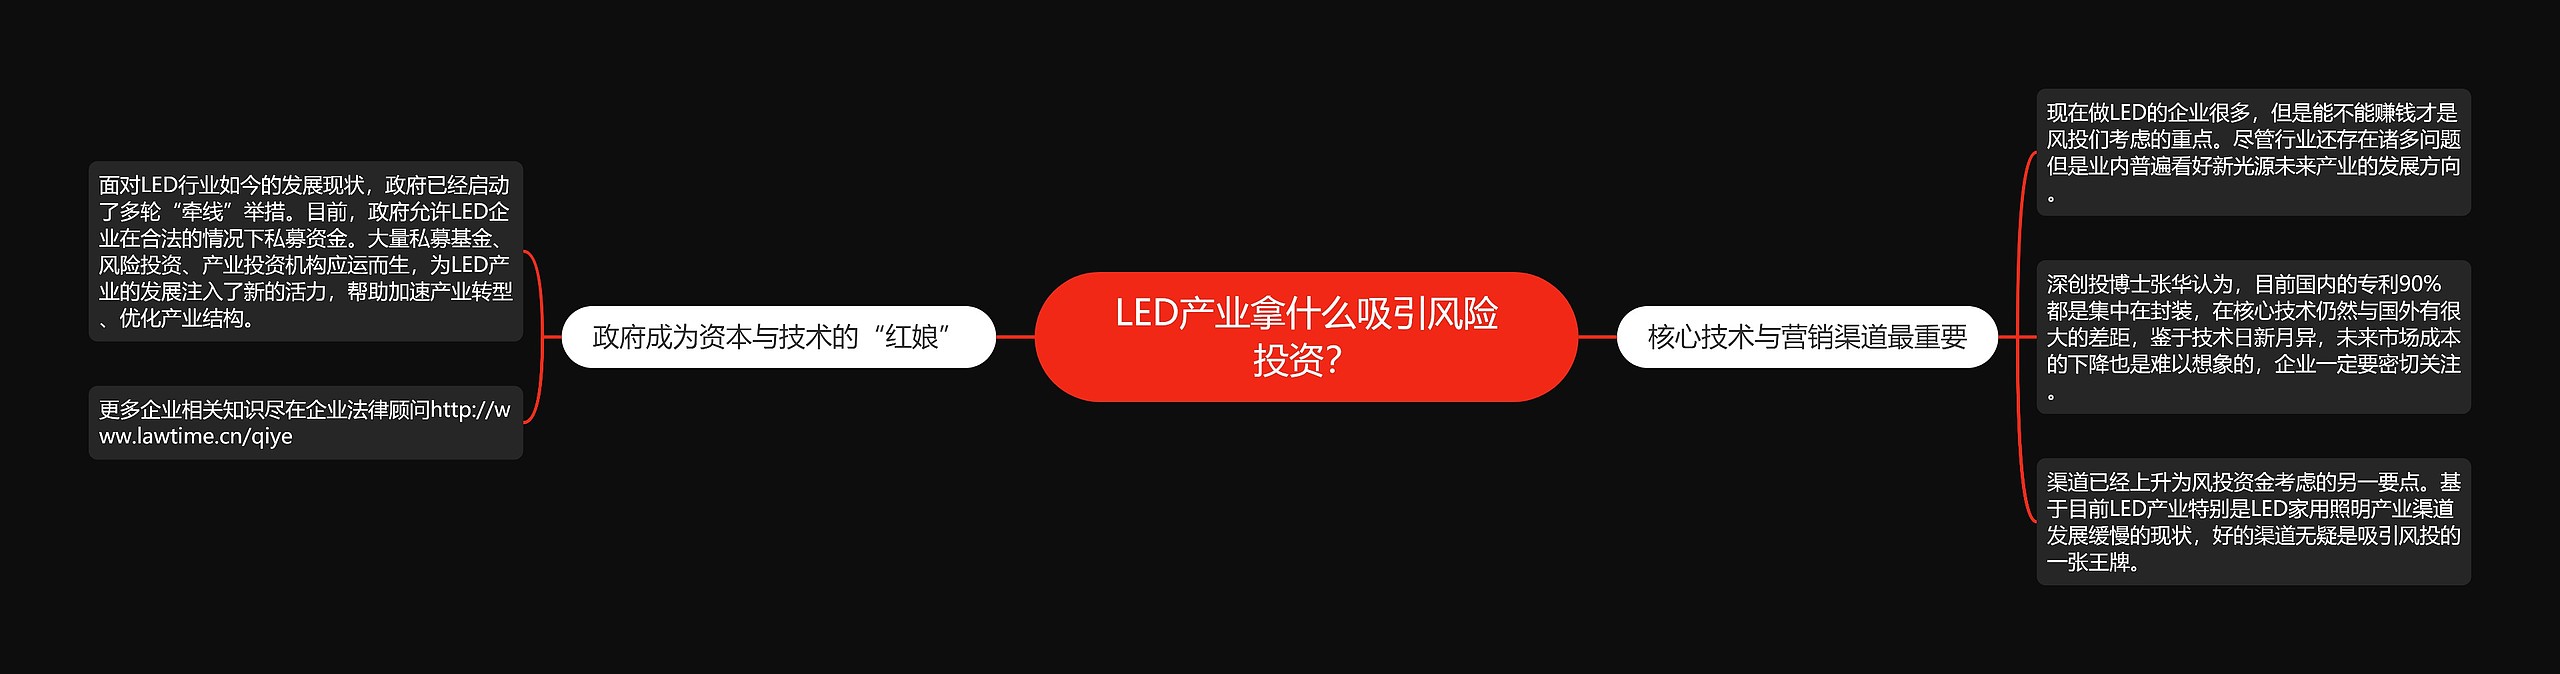 LED产业拿什么吸引风险投资？